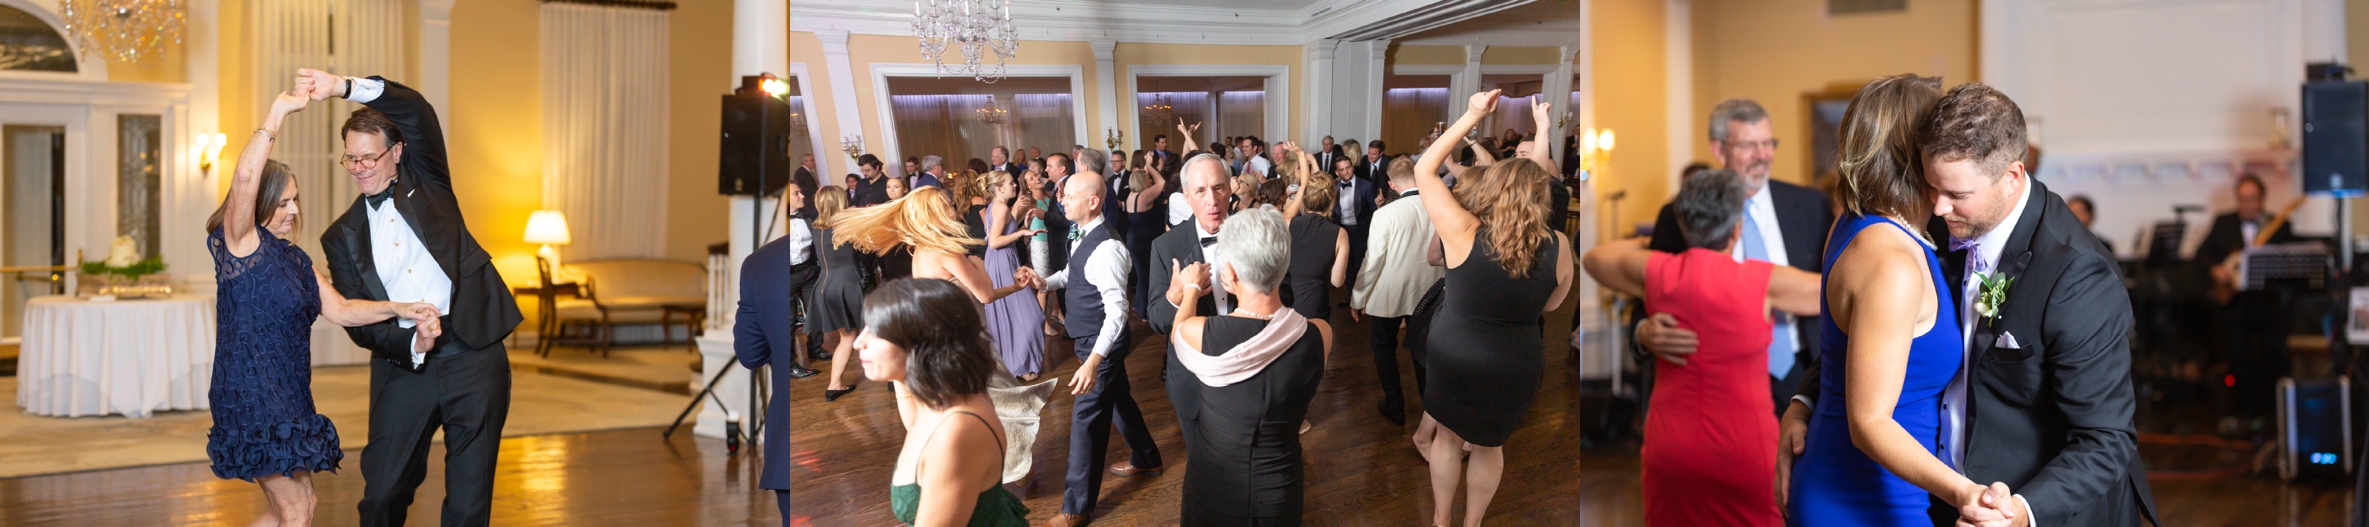 Reception Photography, Wedding in Cincinnati, Dancing Pictures